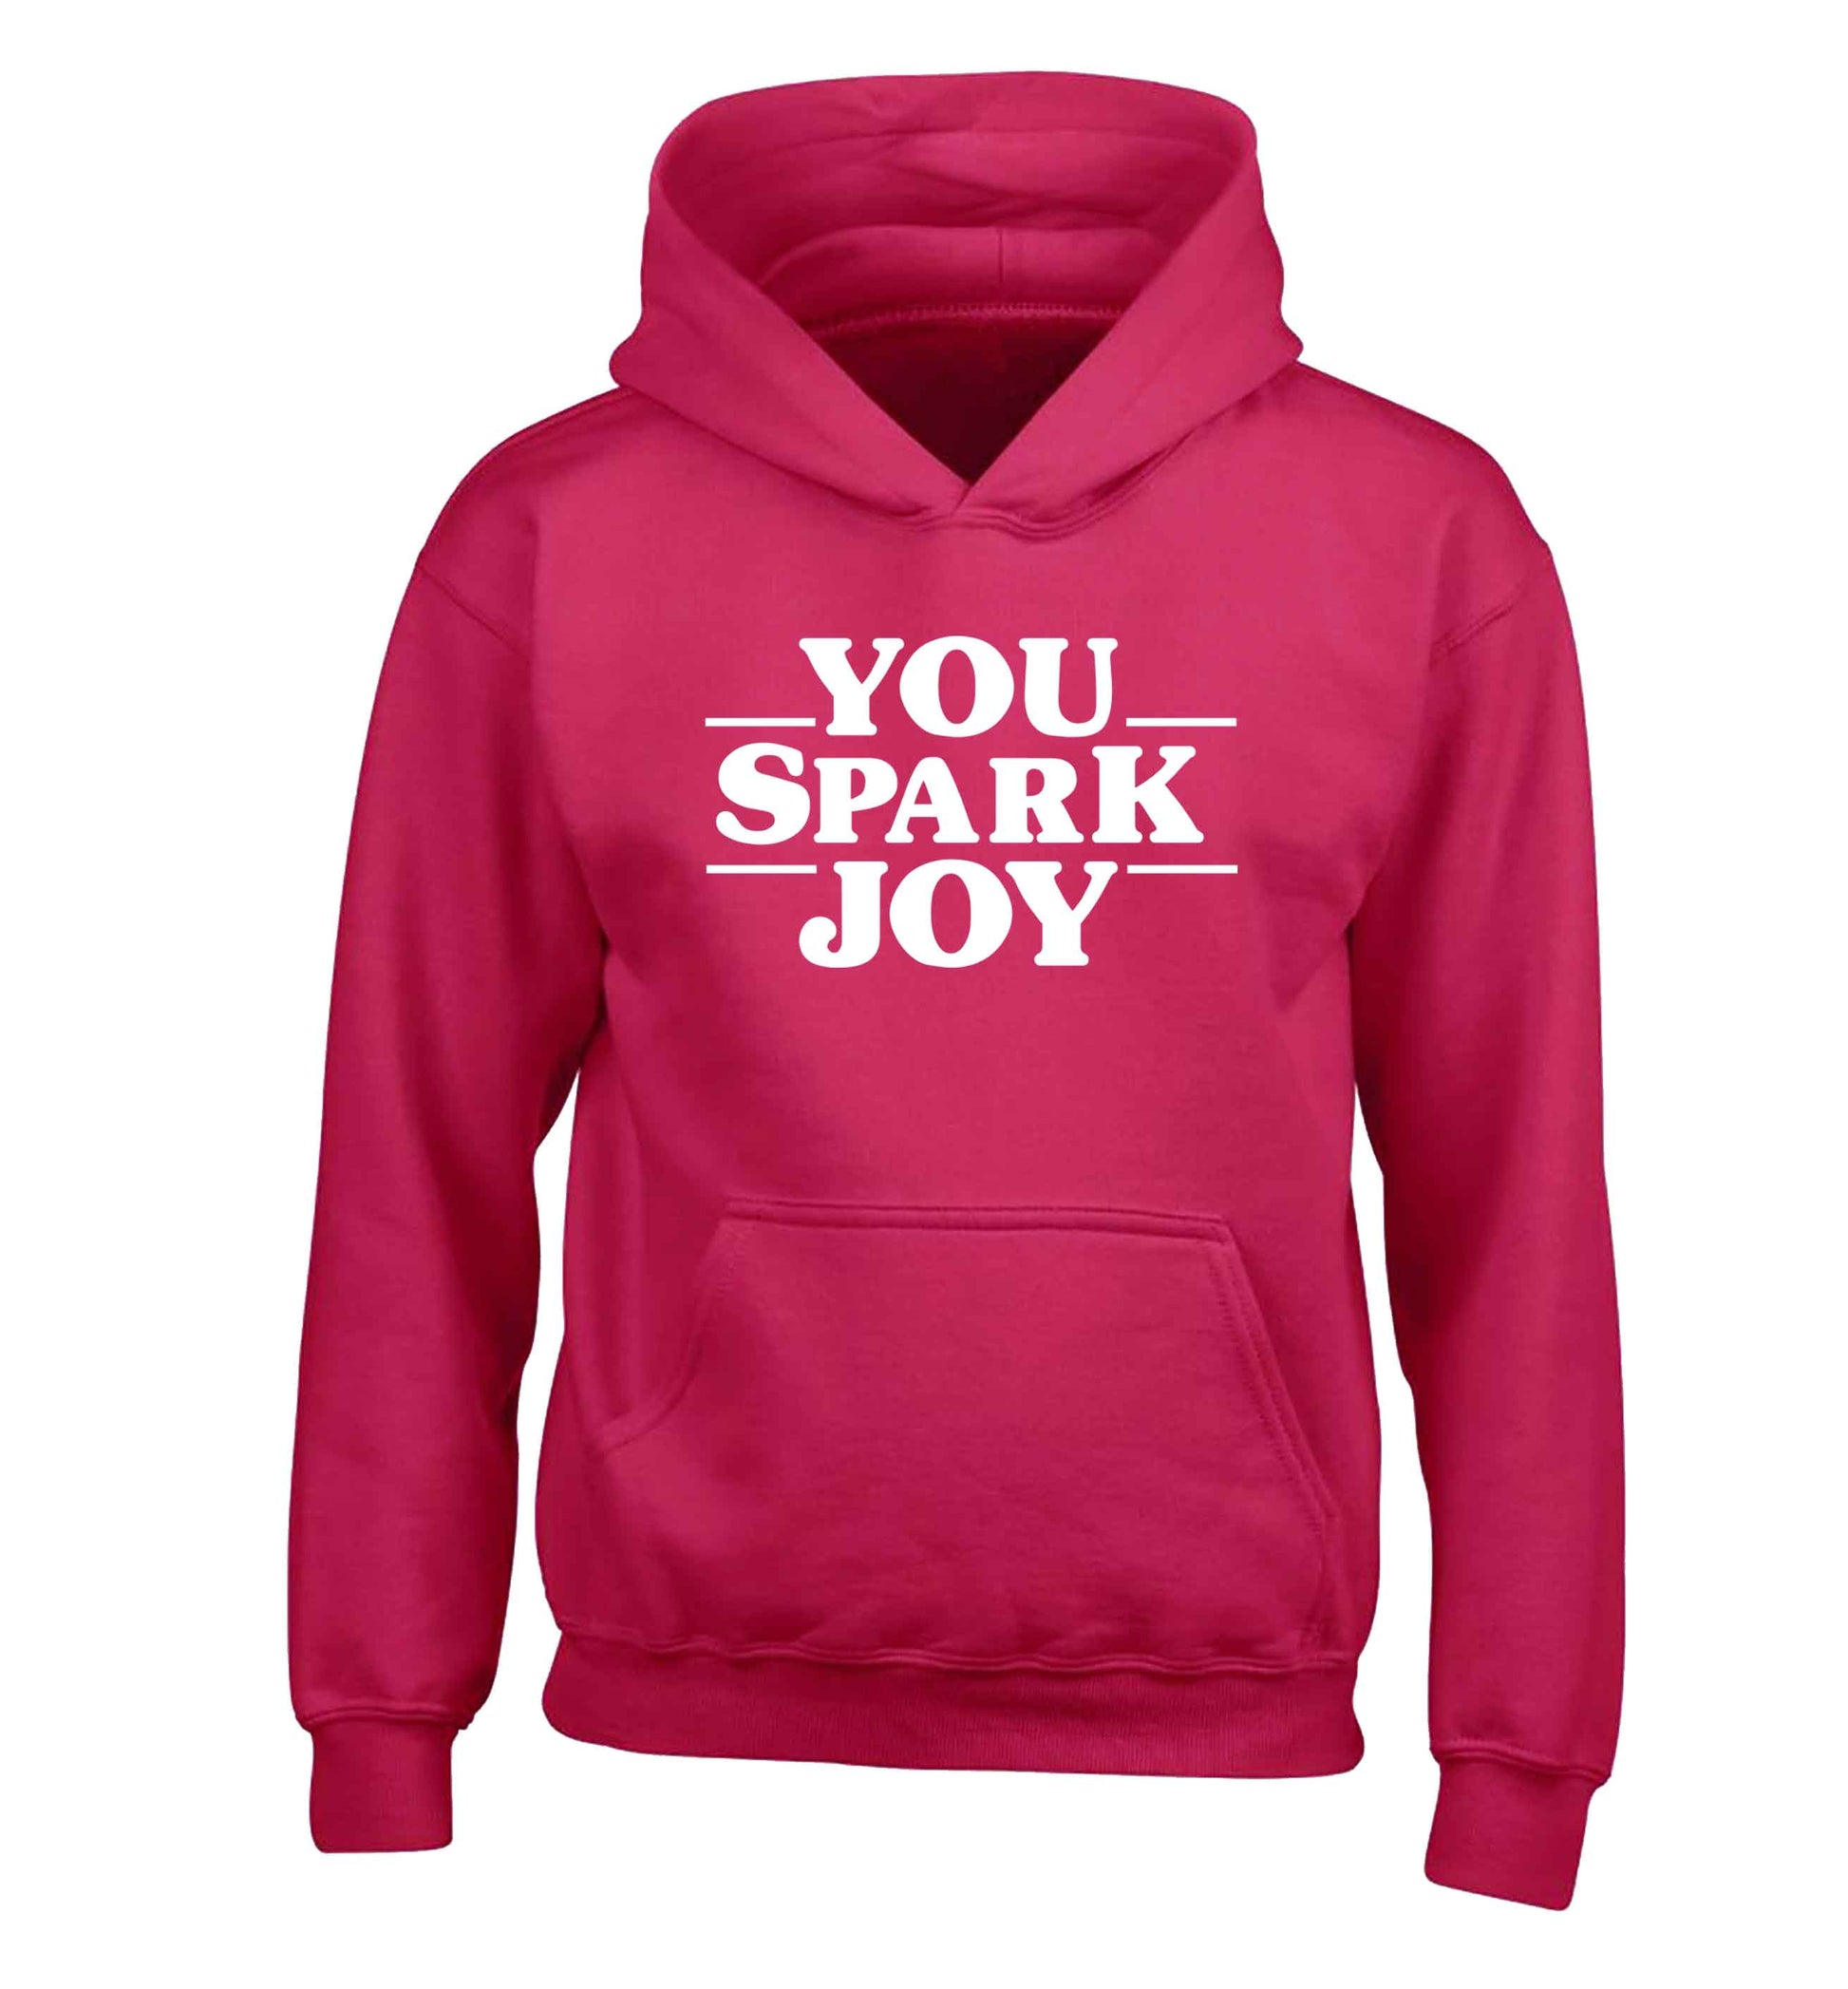 You spark joy children's pink hoodie 12-13 Years